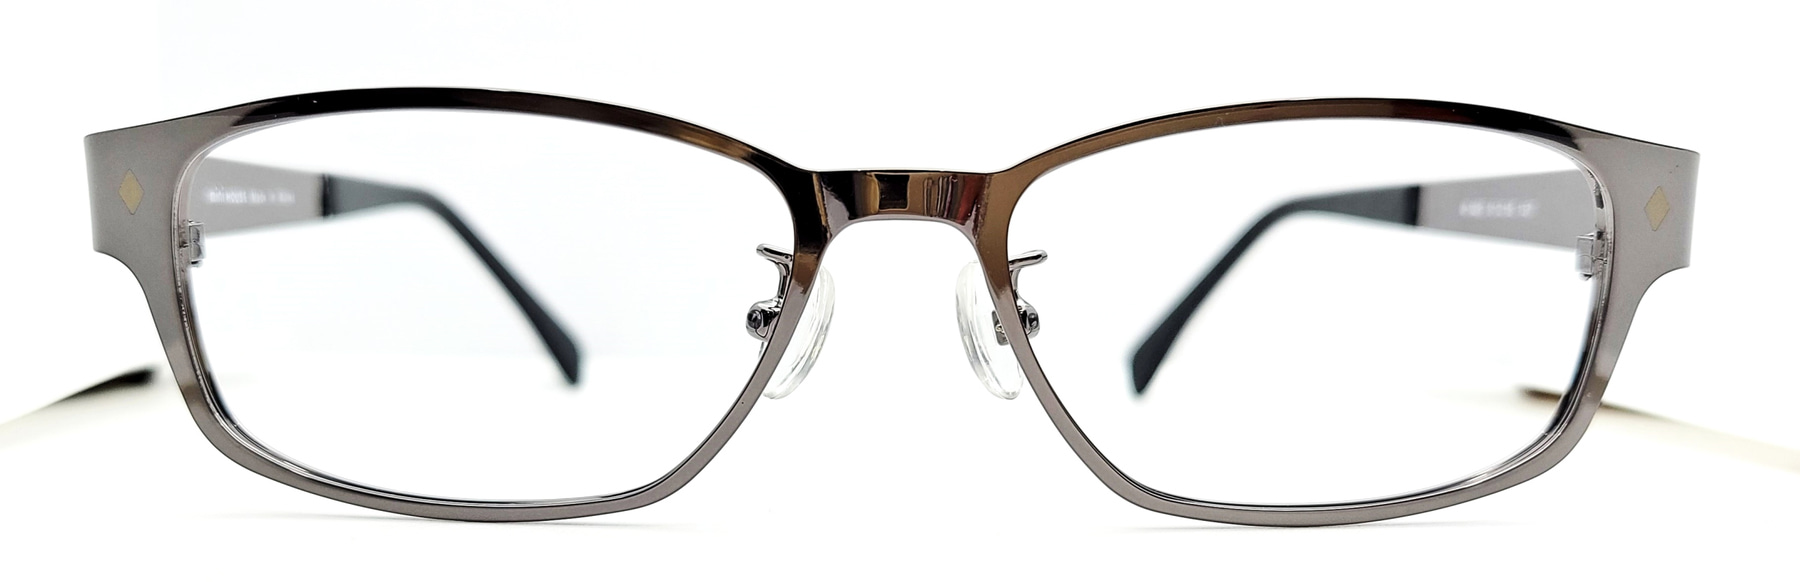 MINIHOUSE M-025, Korean glasses, sunglasses, eyeglasses, glasses